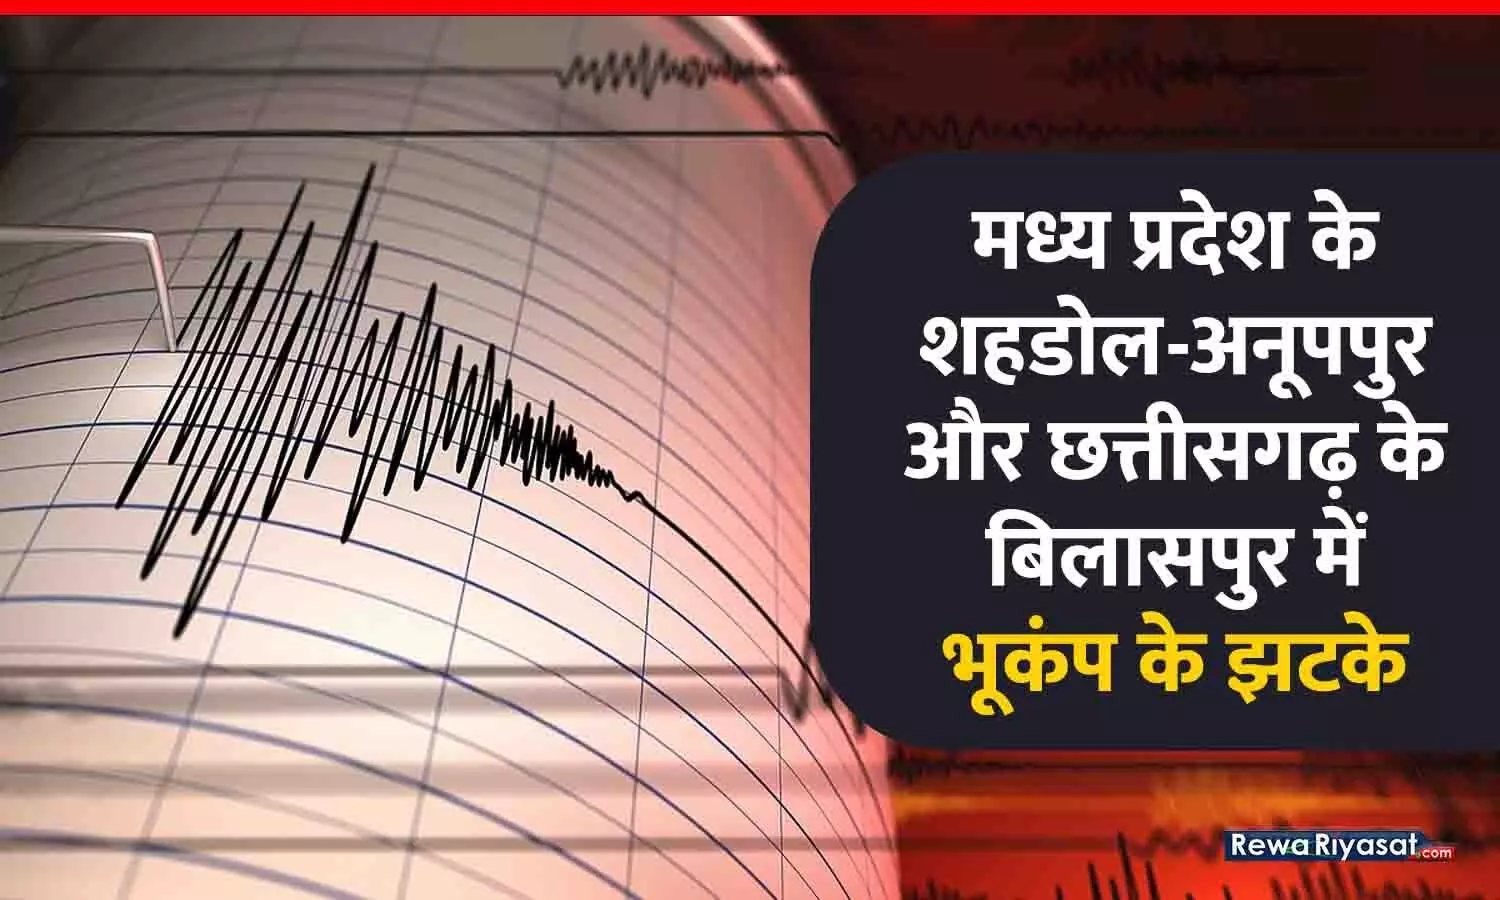 Earthquake tremors in Shahdol-Anuppur of MP and Bilaspur of Chhattisgarh